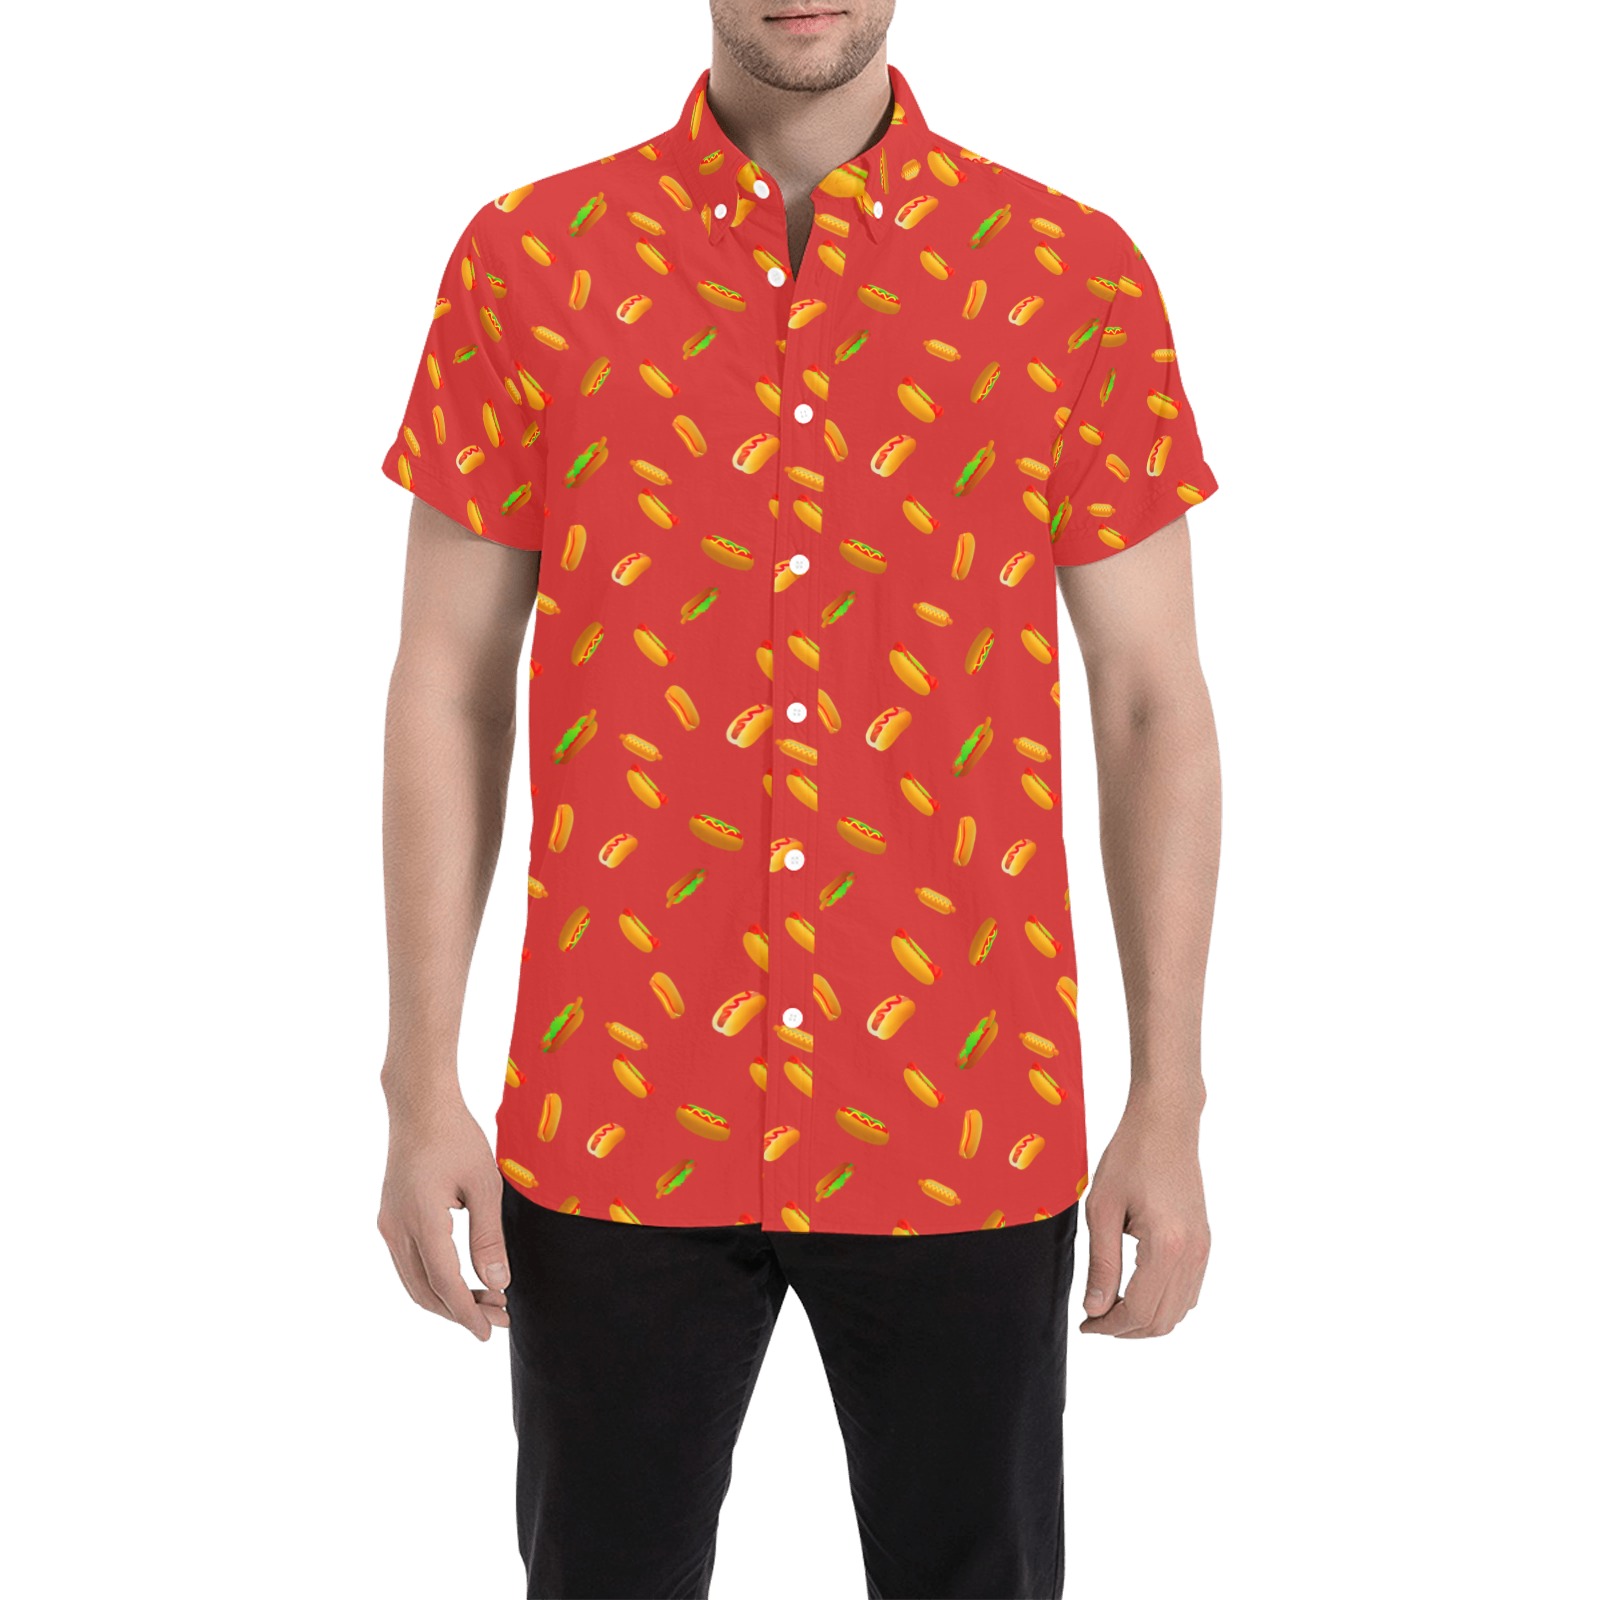 Hot Dog Pattern on Red Men's All Over Print Short Sleeve Shirt (Model T53)